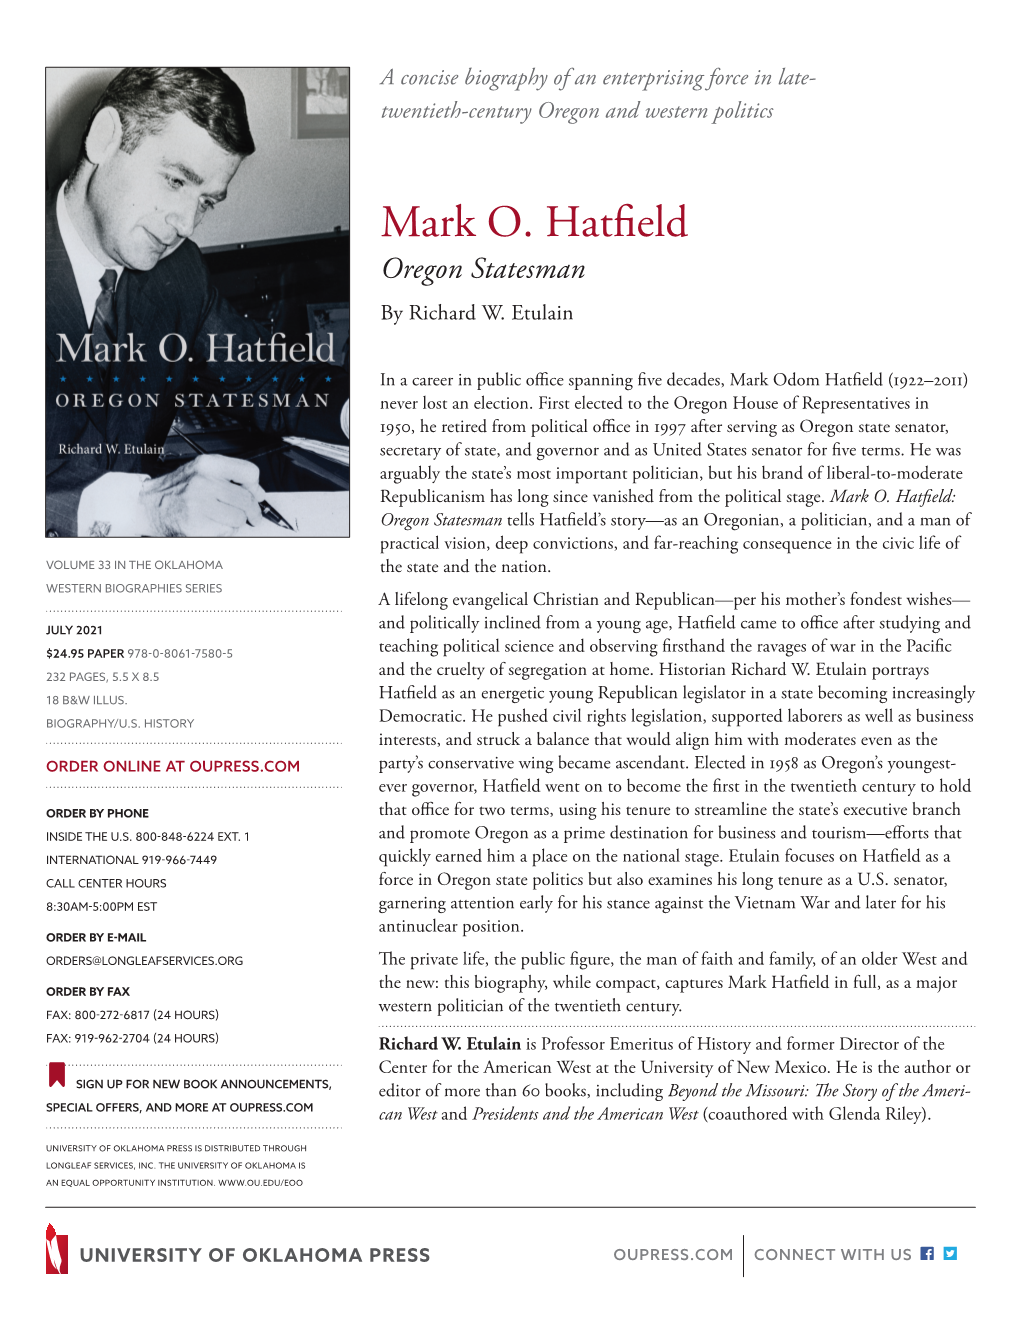 Mark O. Hatfield Oregon Statesman by Richard W